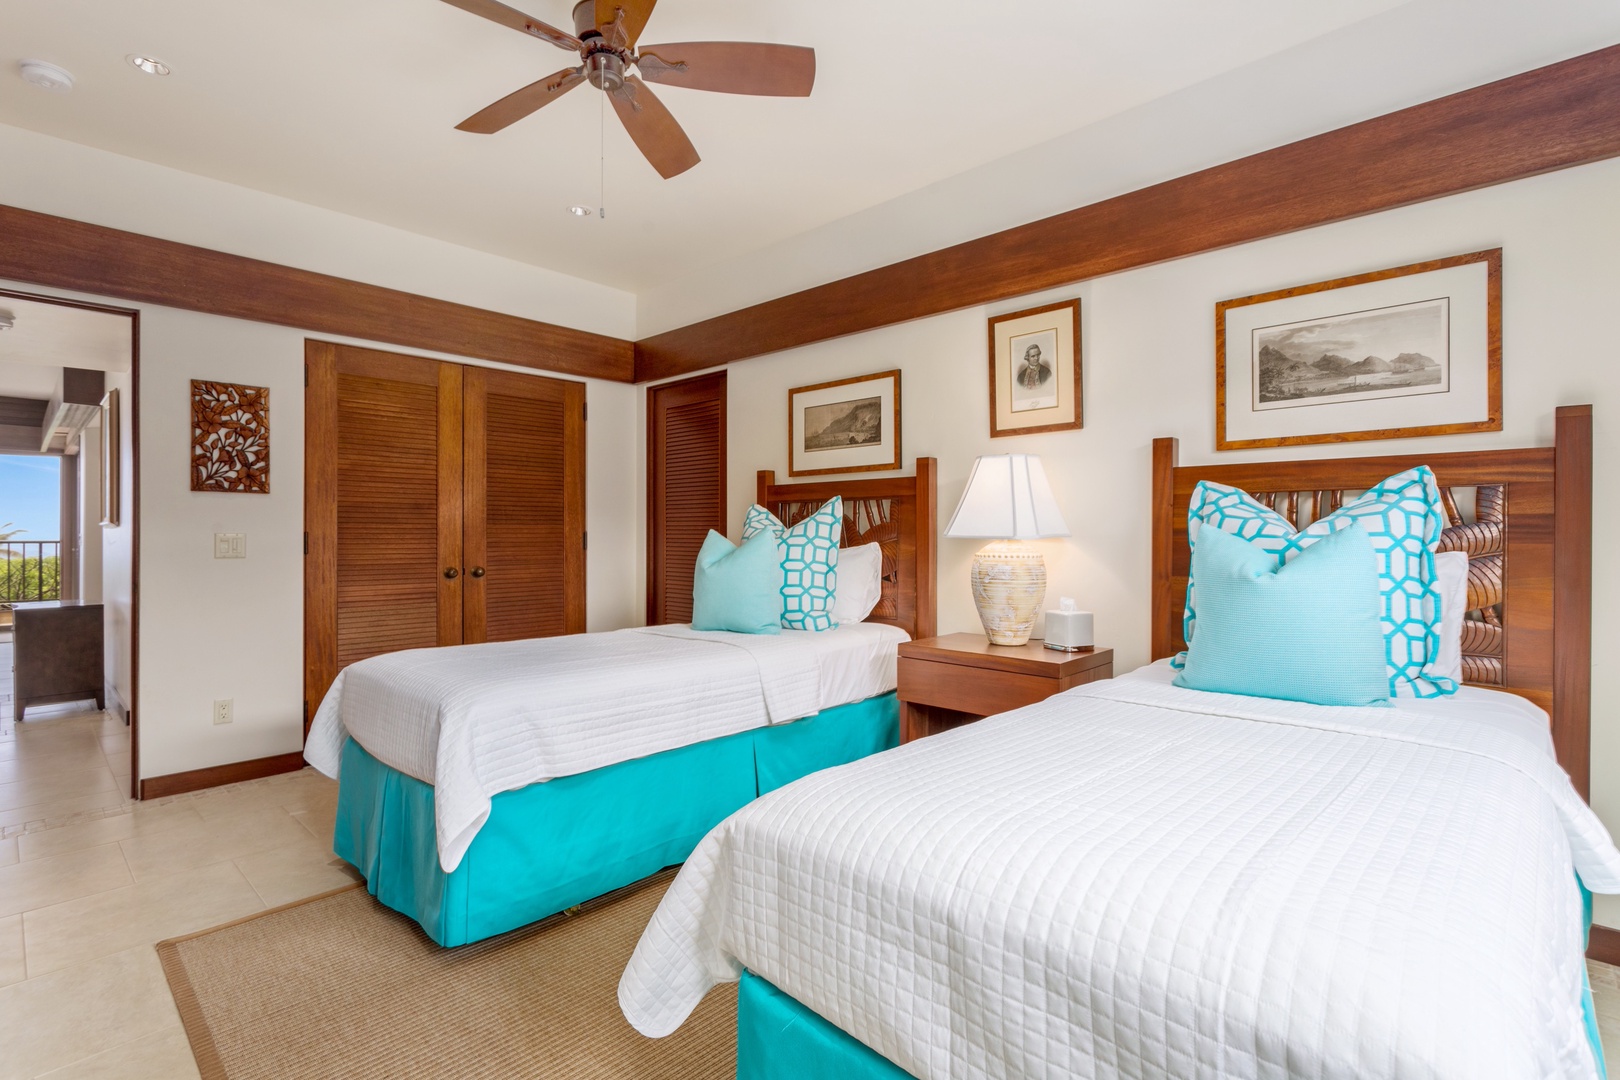 Kamuela Vacation Rentals, 3BD Villas (39) at Mauna Kea Resort - Alternate view of third bedroom.